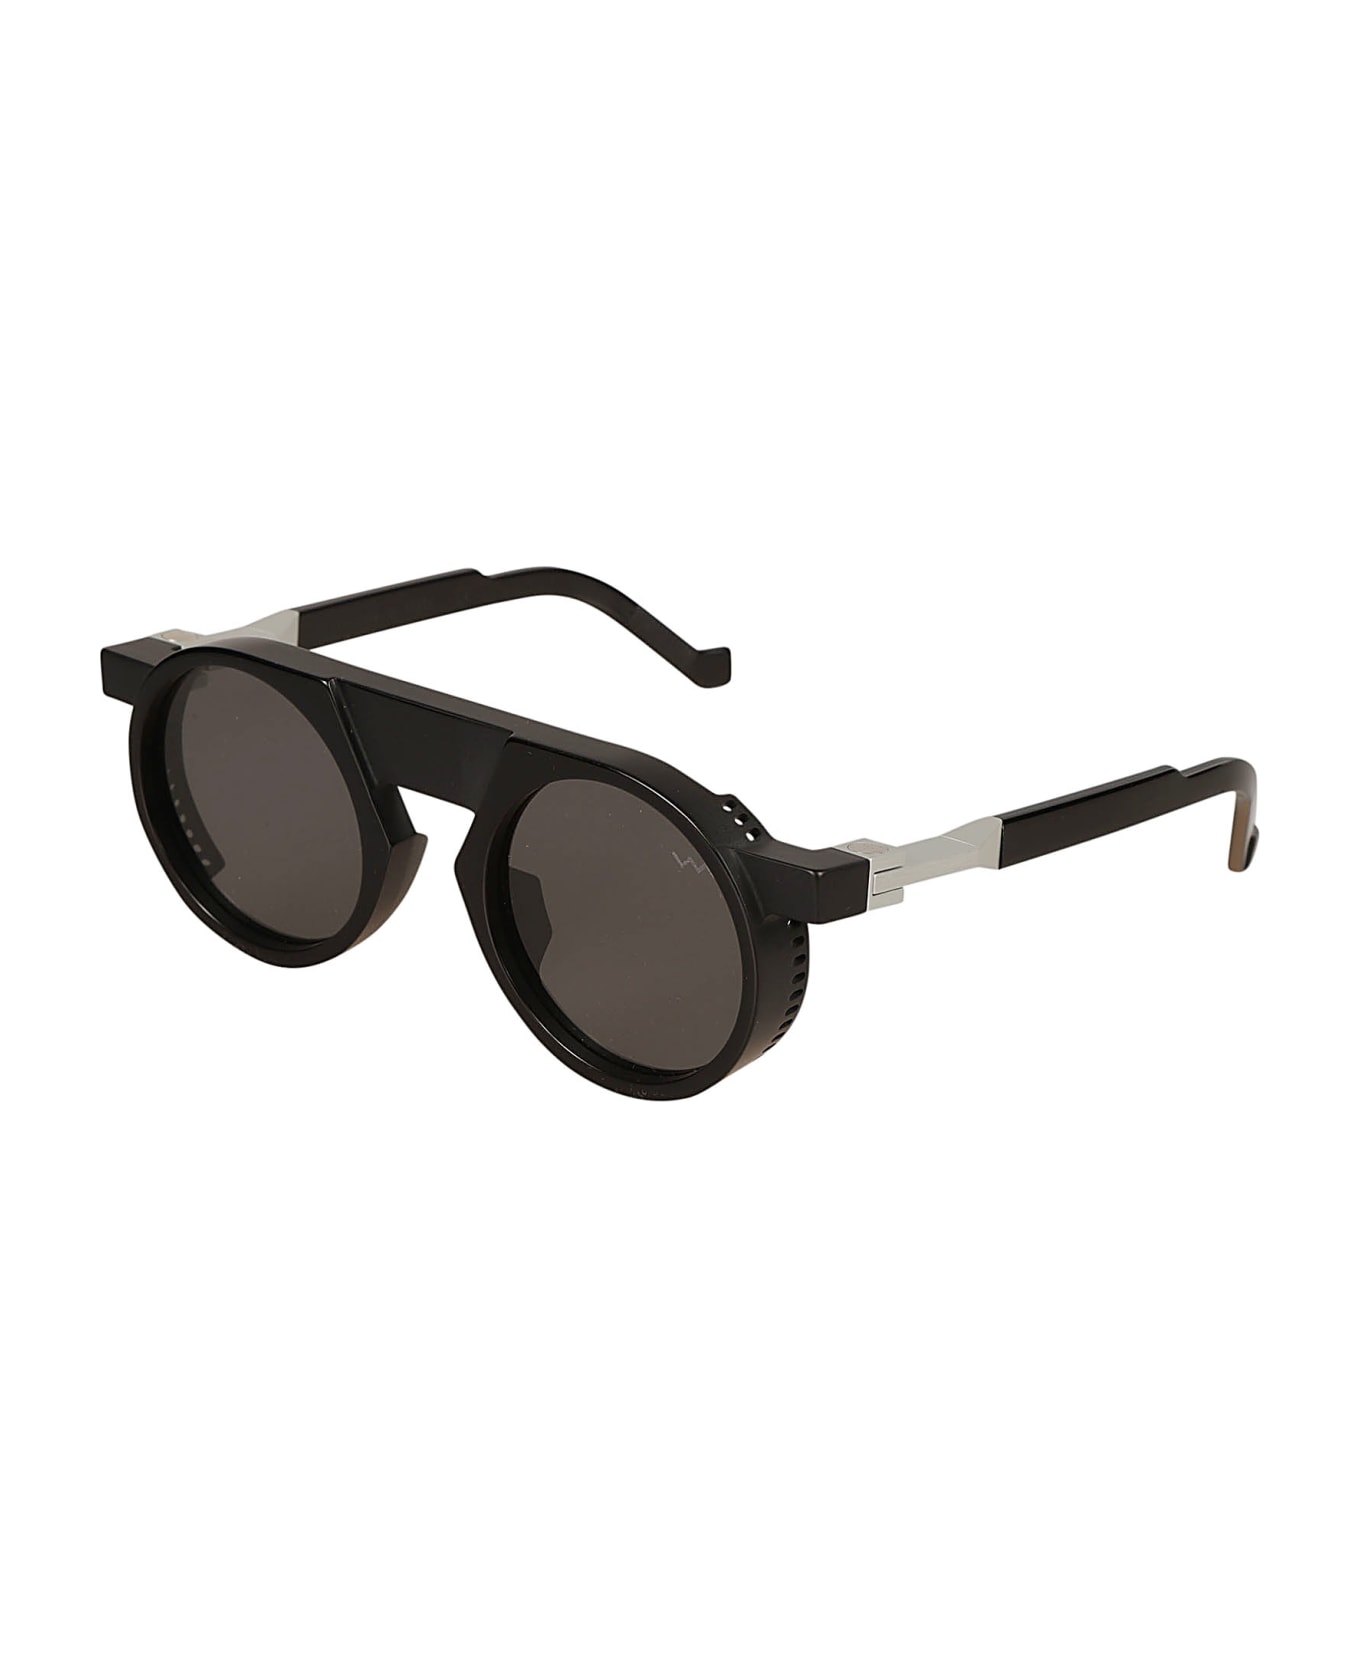 VAVA Round Frame Sunglasses Sunglasses - Black サングラス